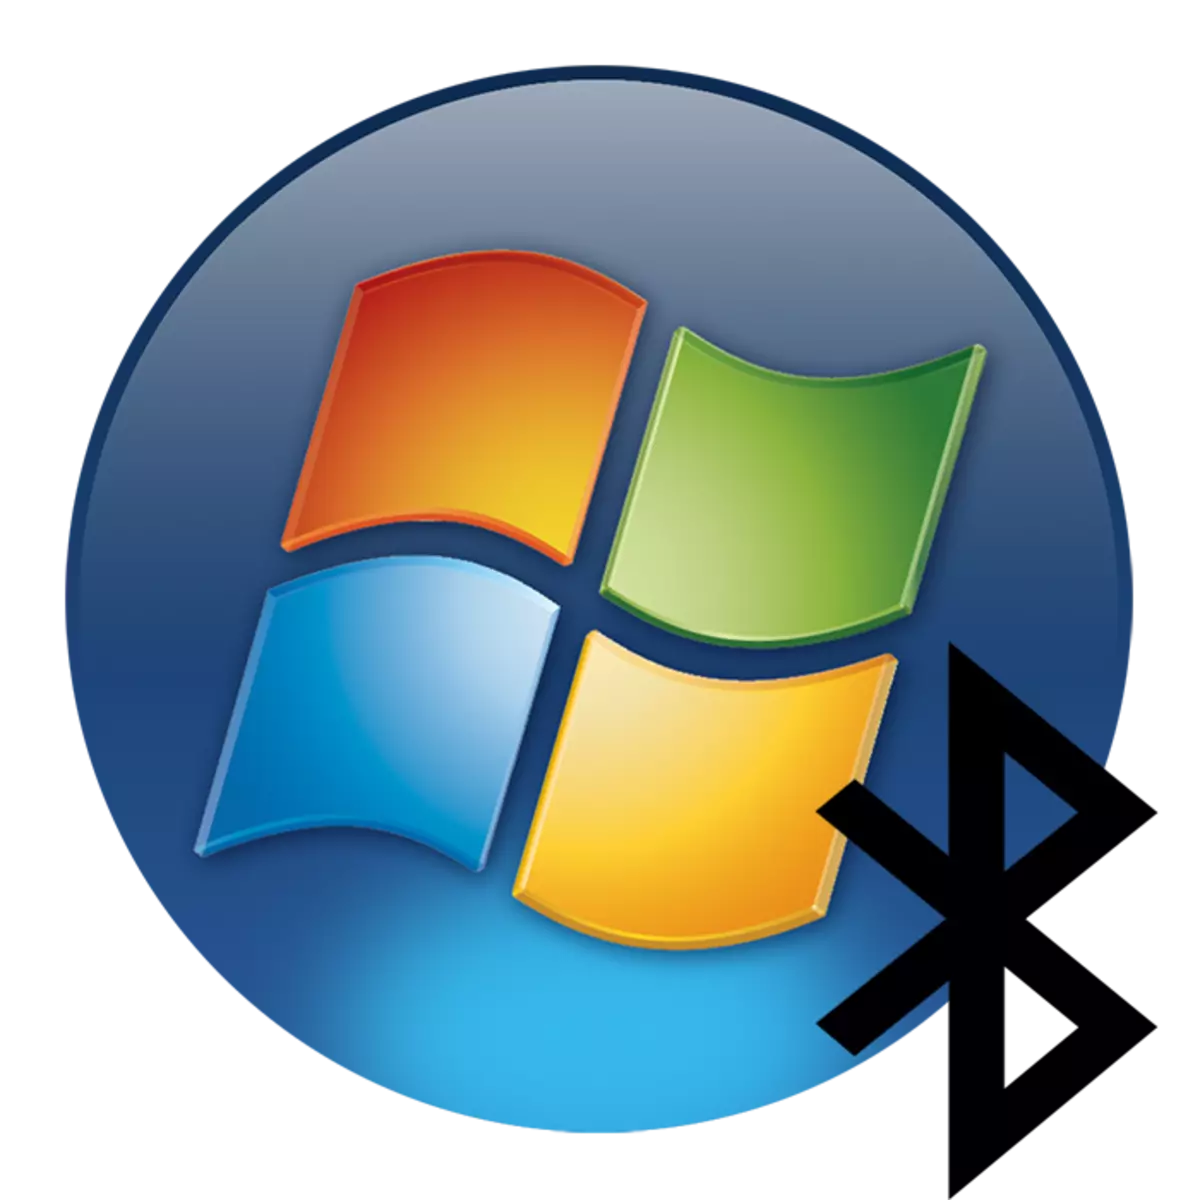 Windows 7 كومپيۇتېرىدا كۆك چىش ئورنىتىش كېرەك